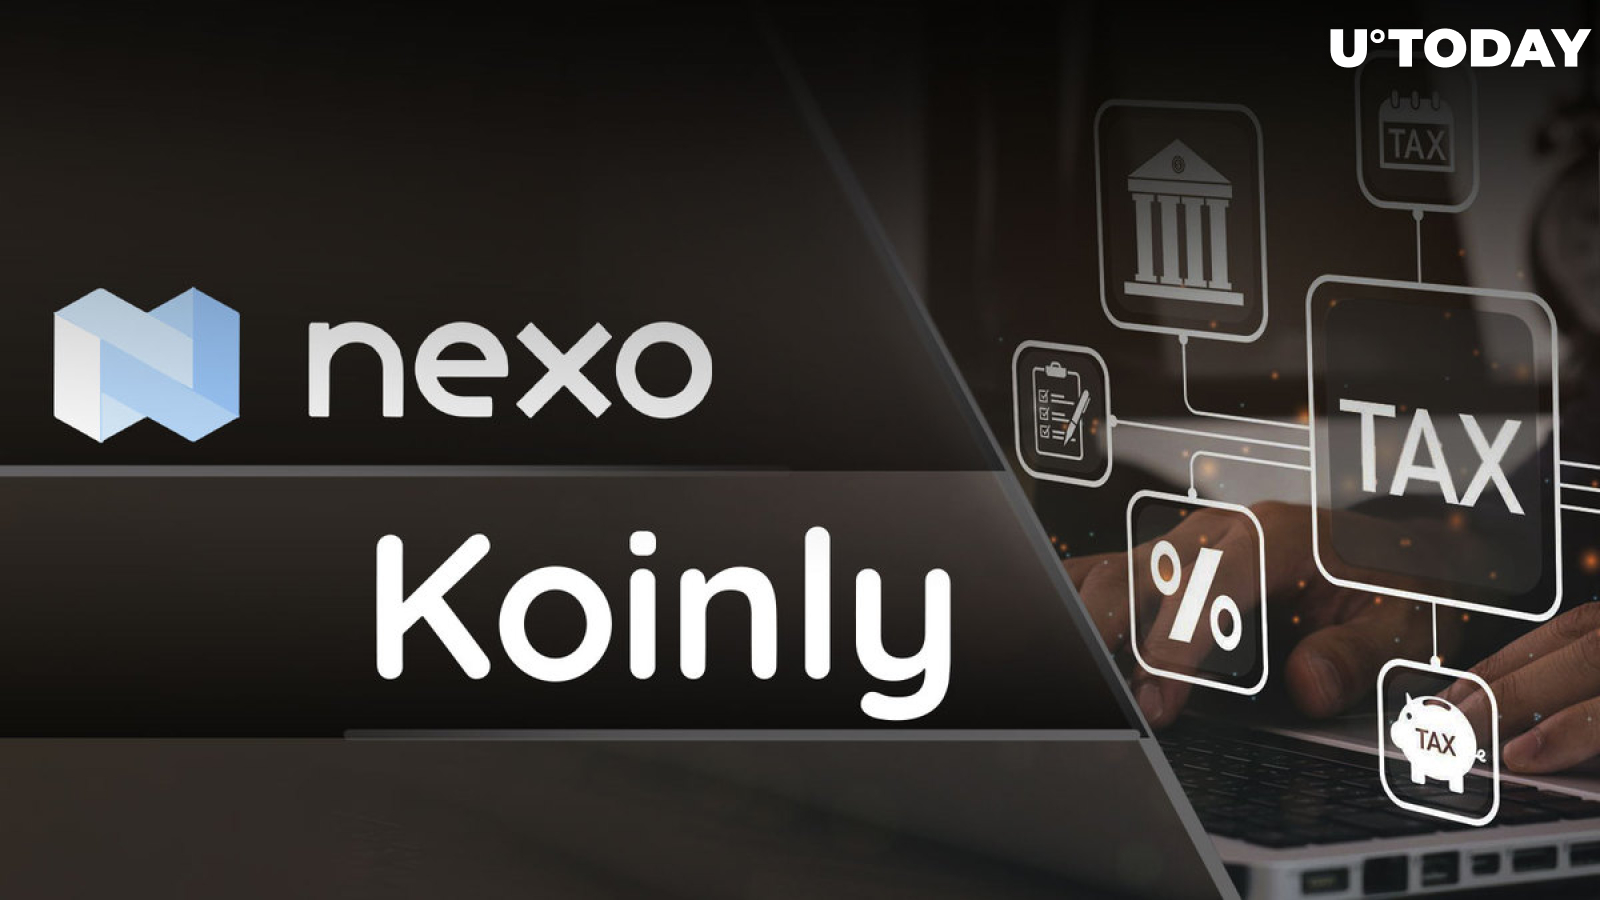 Crypto Exchange Nexo Integrates Koinly Tax Reporting Tool